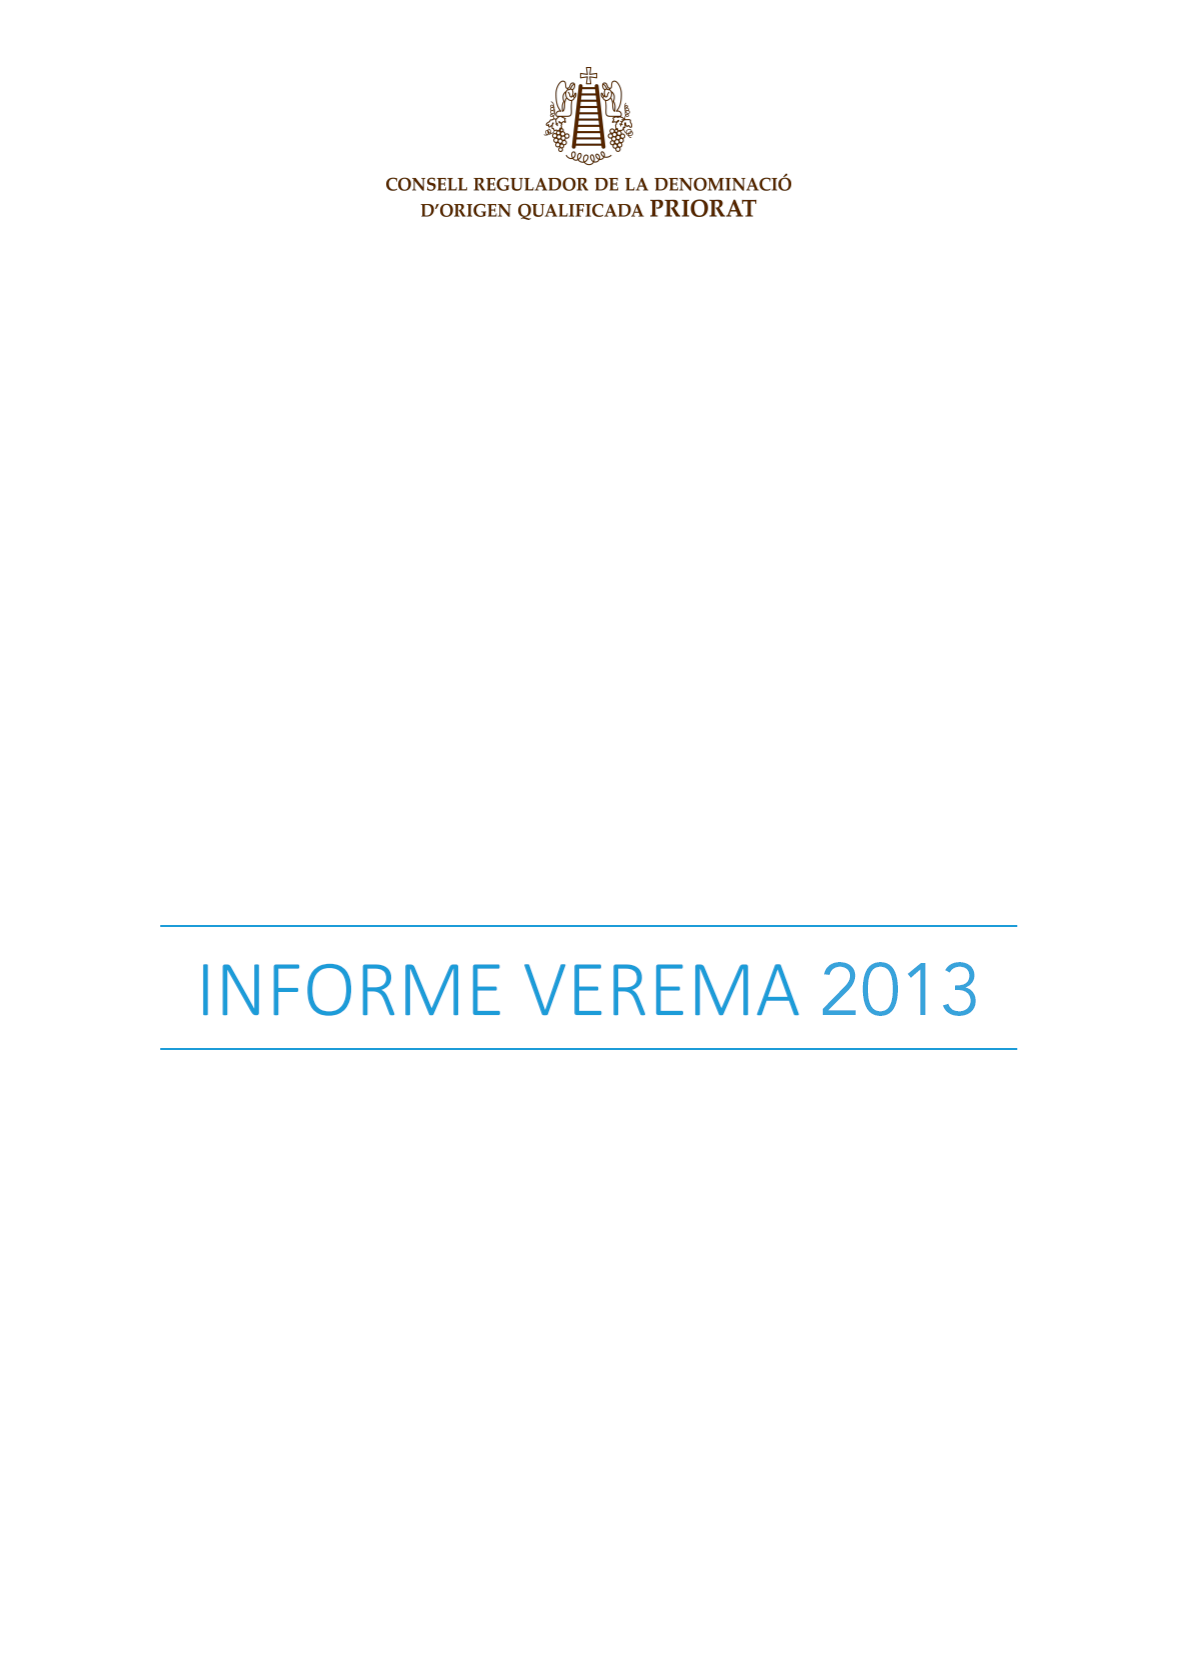 Informe de verema 2013